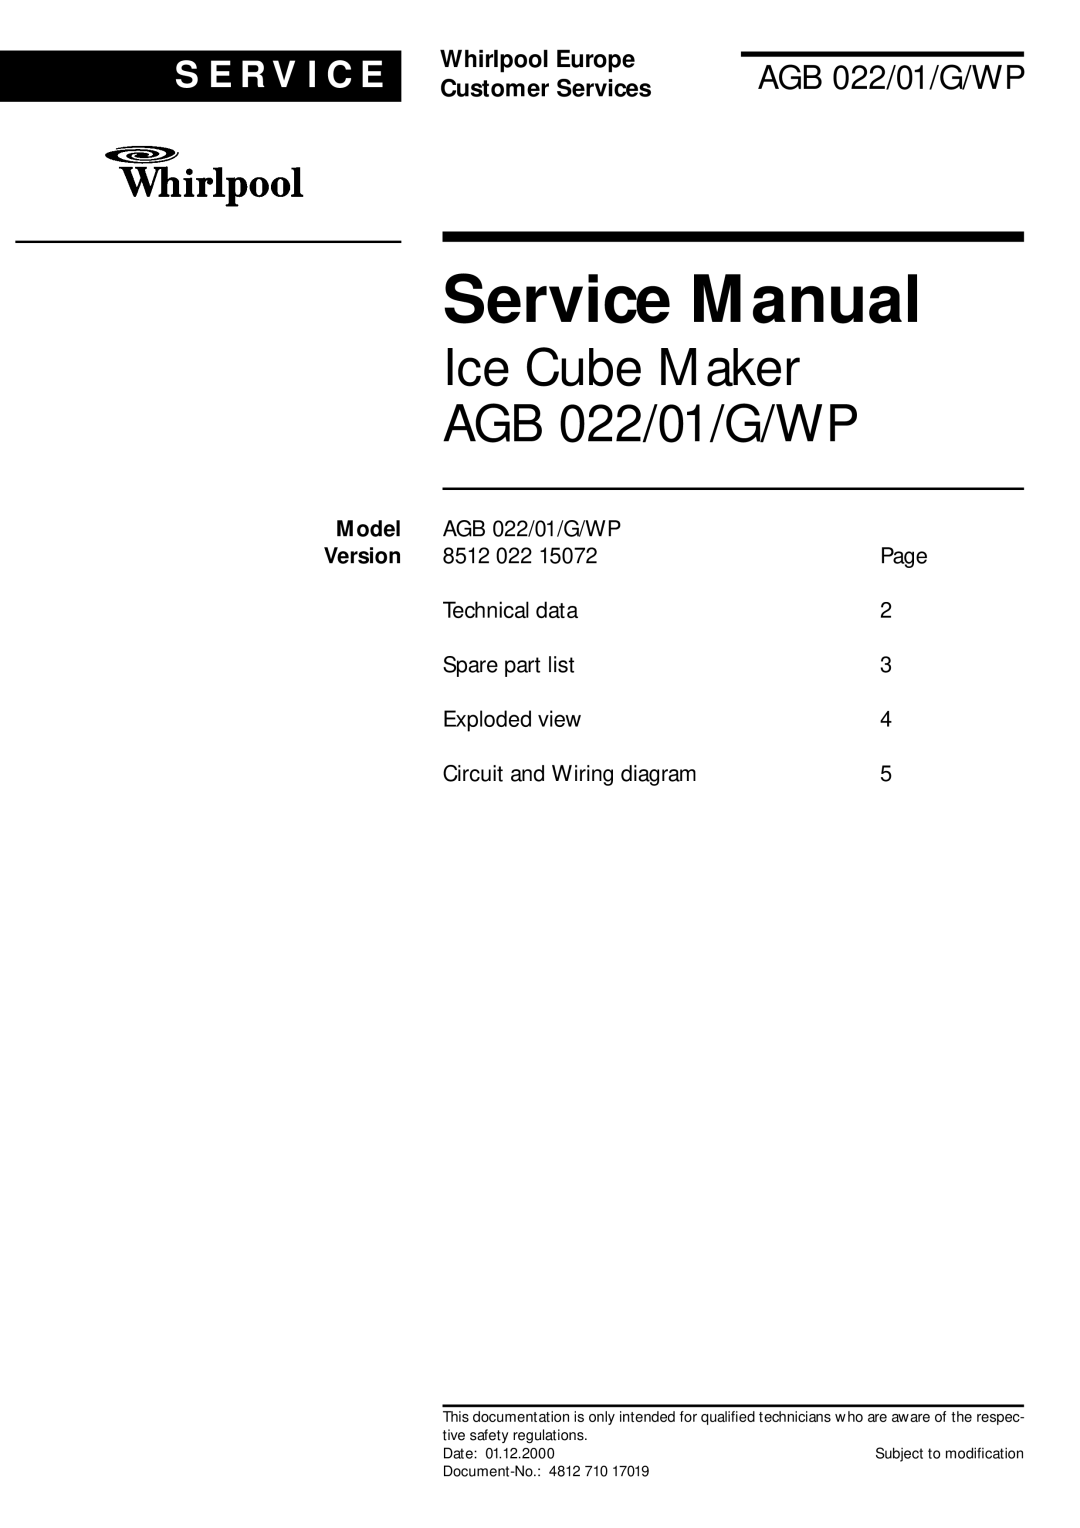 Whirlpool service manual Model, Ice Cube Maker AGB 022/01/G/WP, S E R V I C E, Whirlpool Europe, Customer Services 